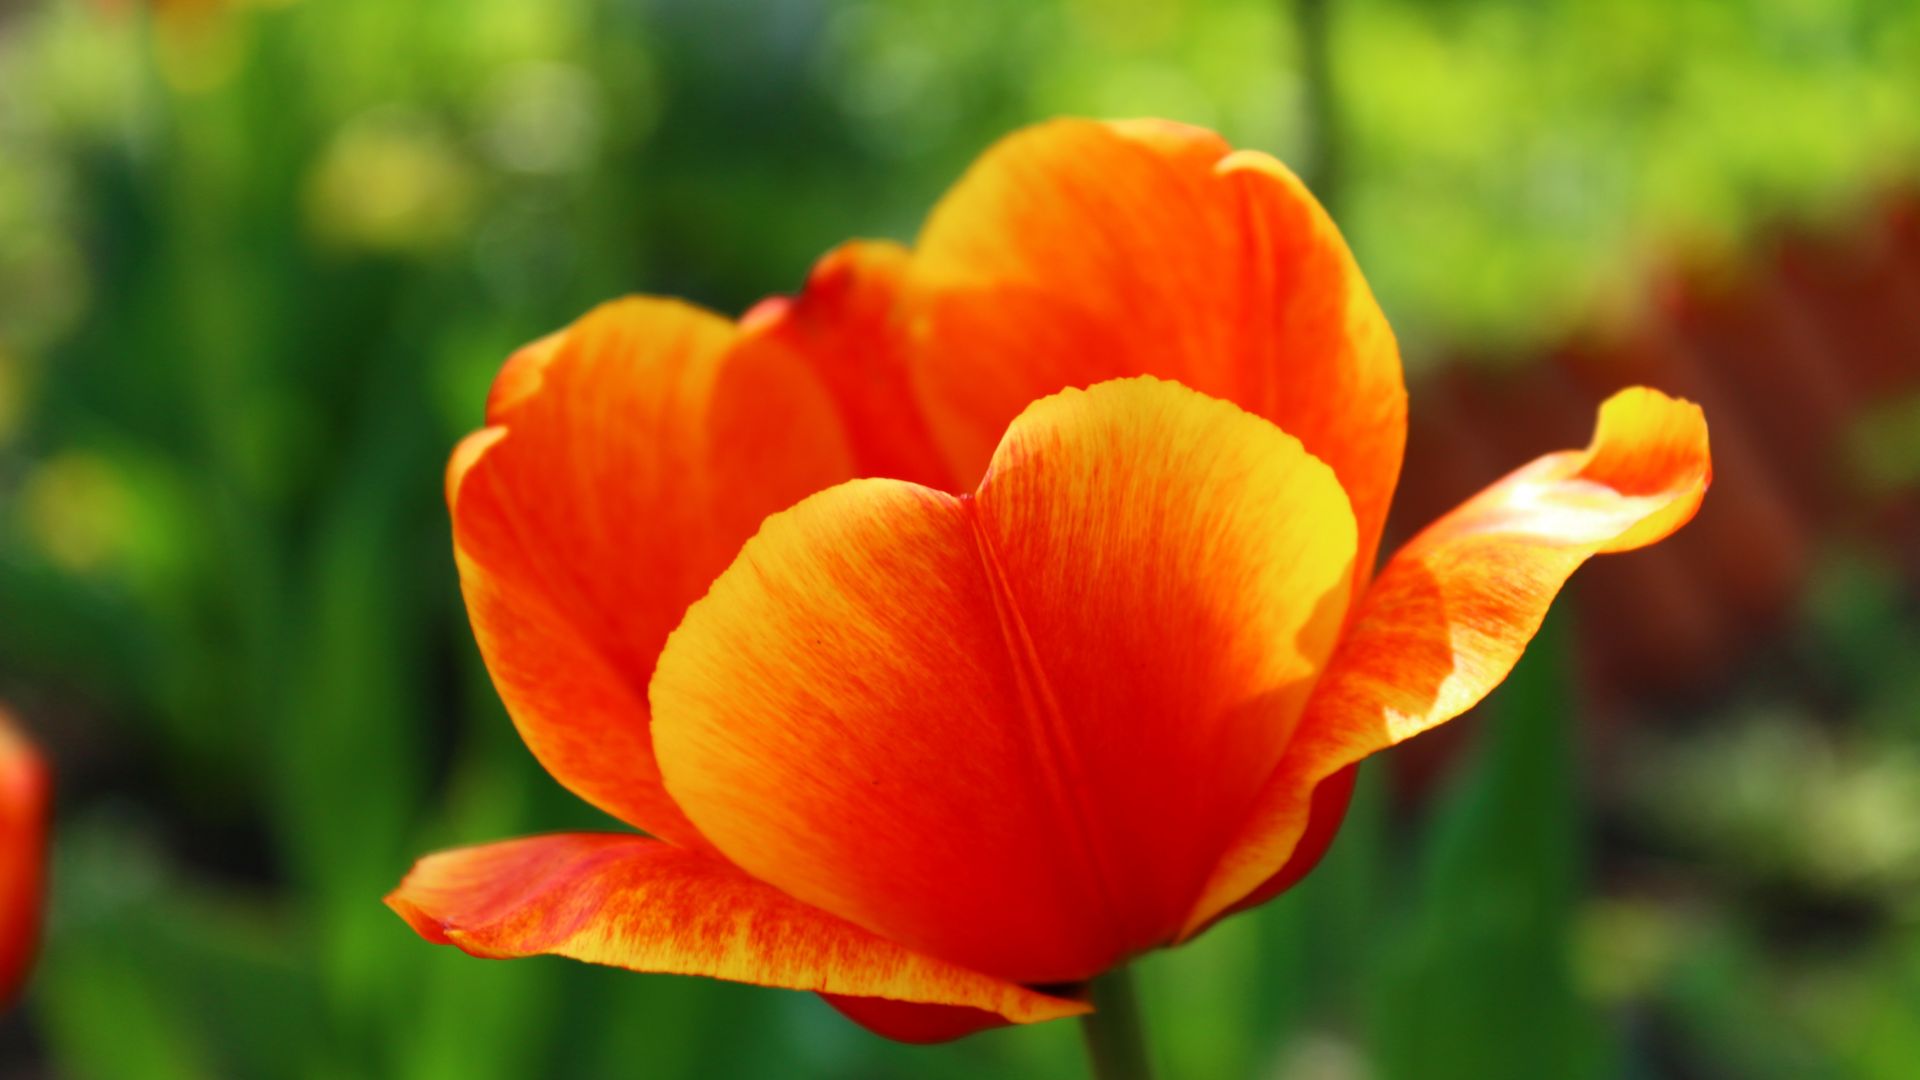 Wallpaper Tulip, red orange flower, close up